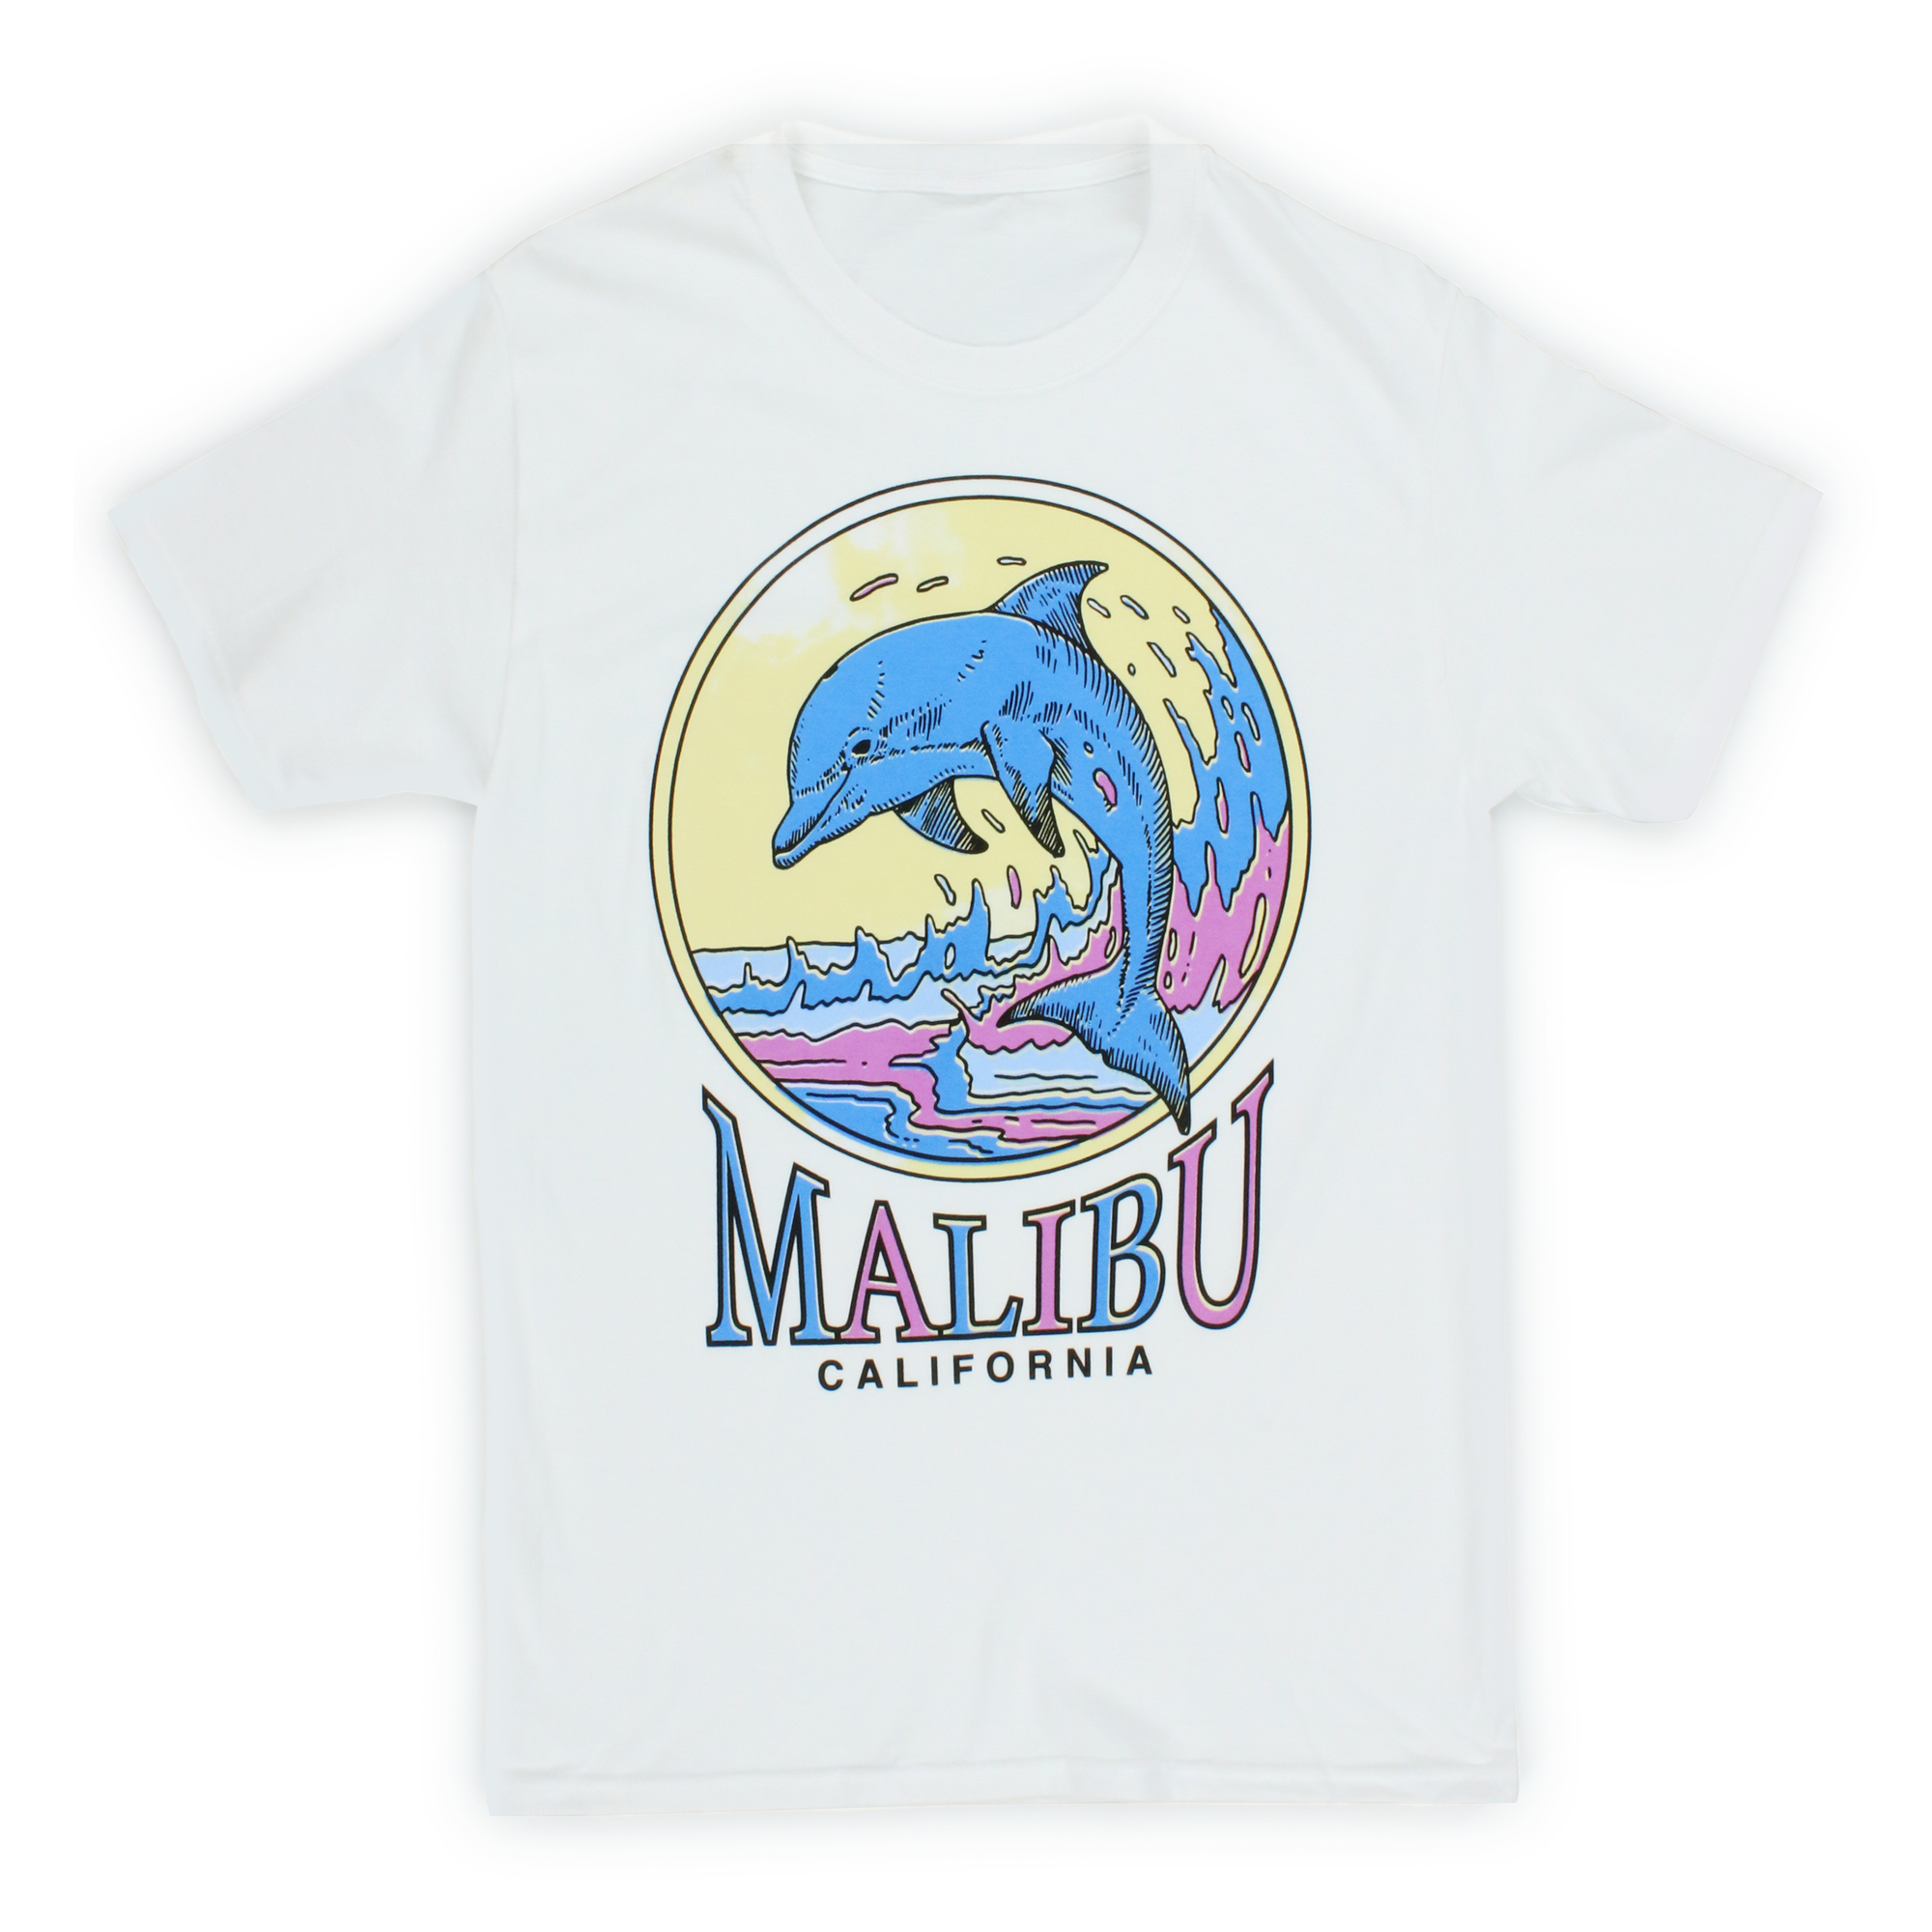 malibu, california dolphin graphic tee - small